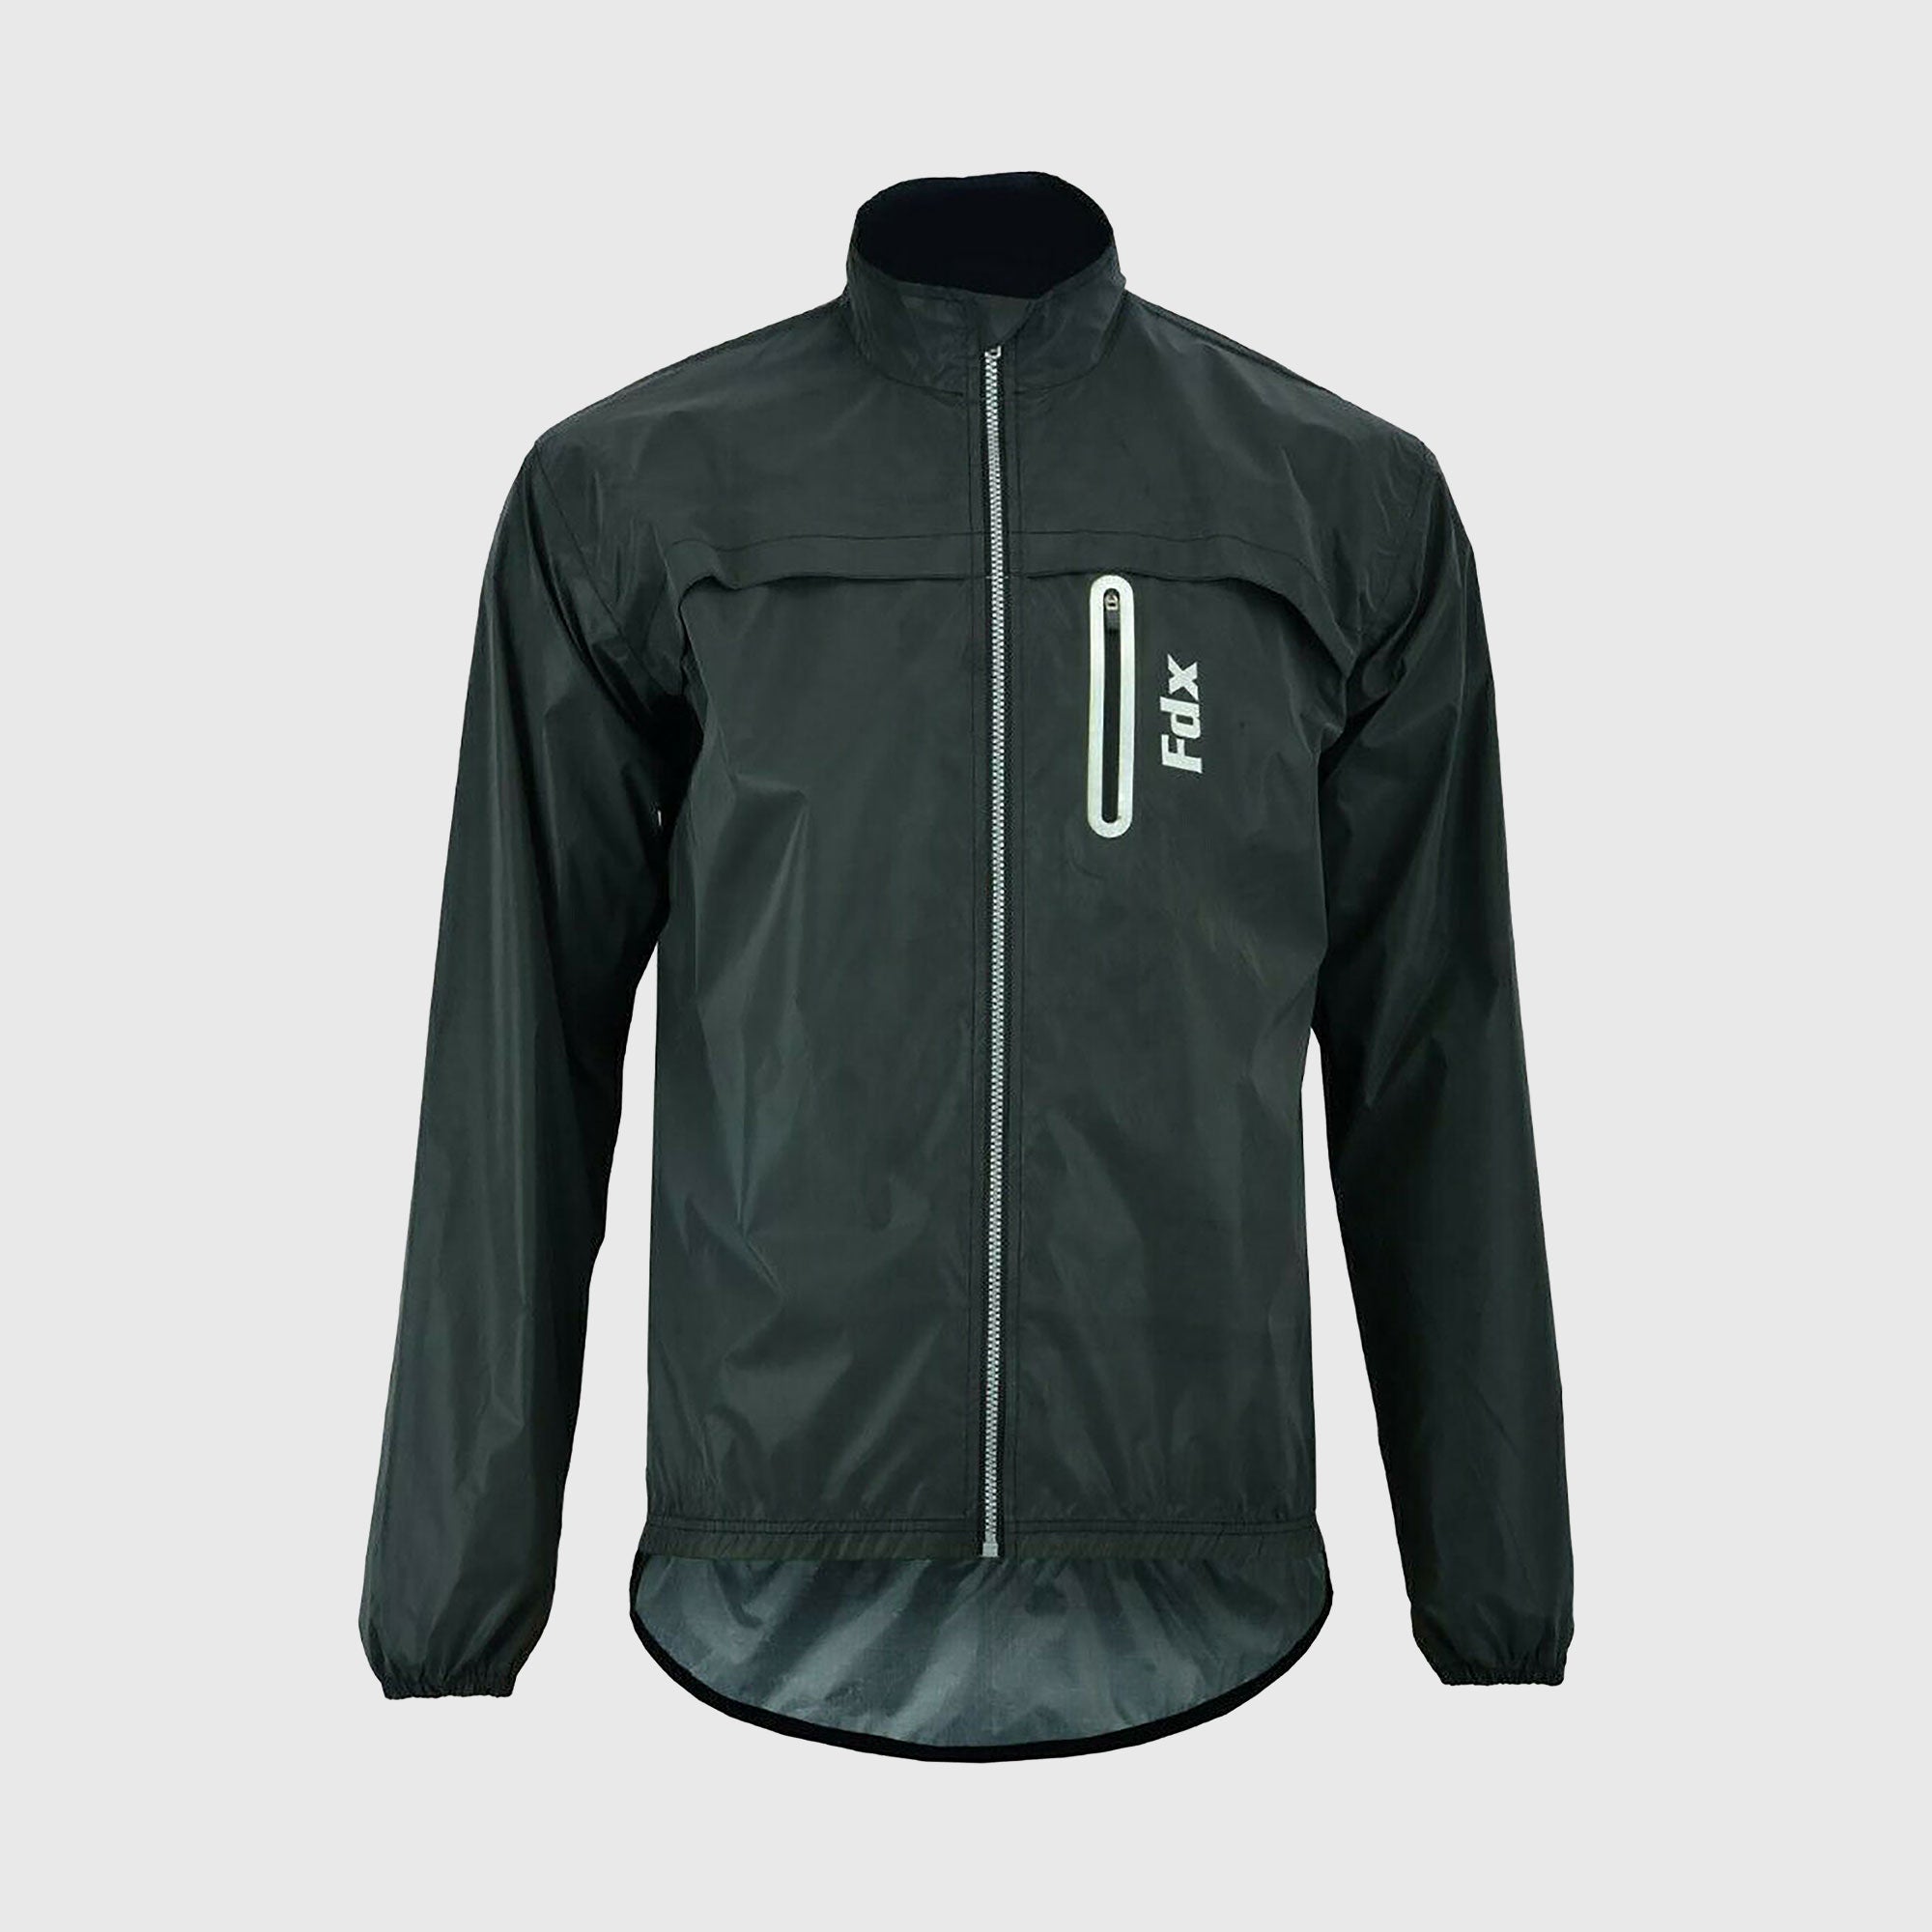 Fdx 360° Black Reflective Waterproof Cycling Jacket